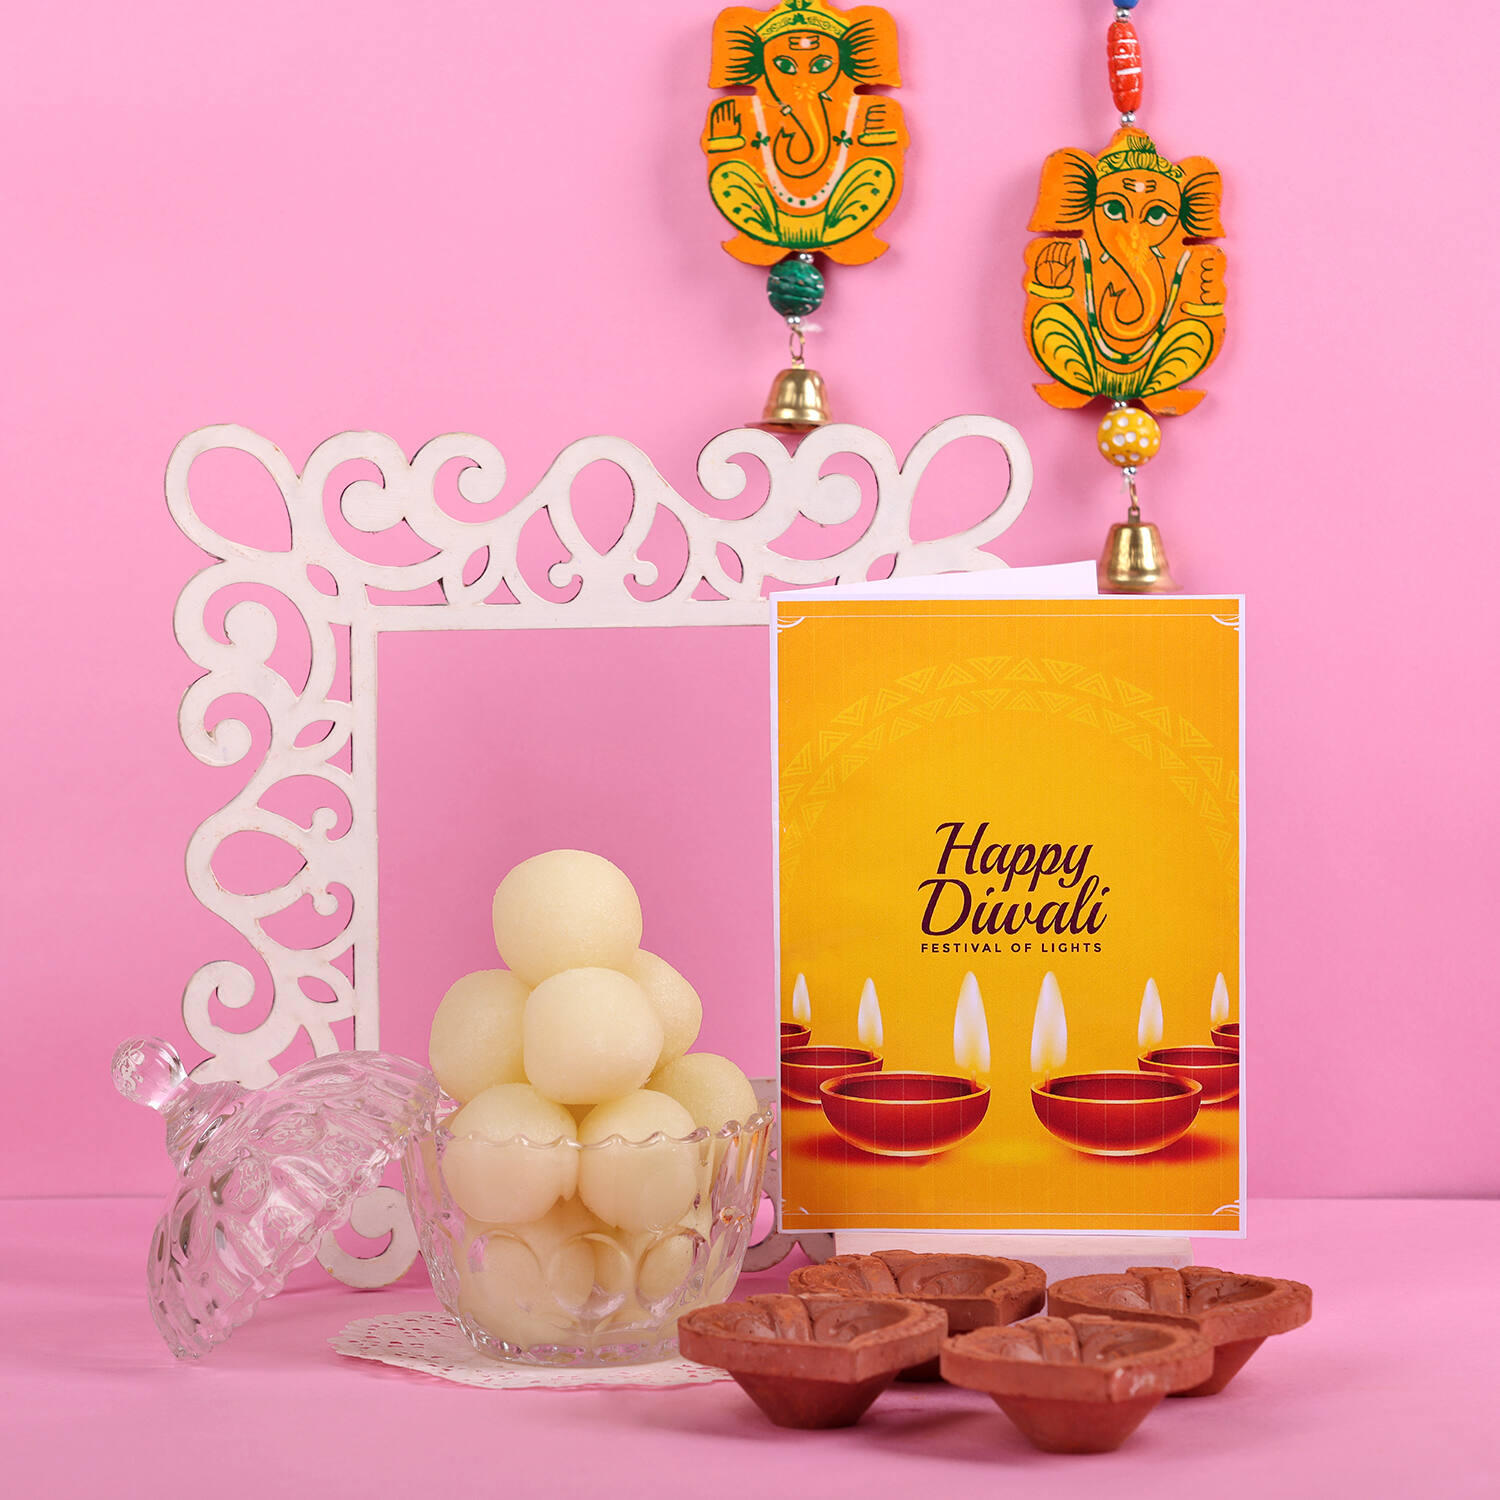 5 Gorgeous Diwali Gift Box Ideas That Are Trending This Festive Season! by  smitha kumari - Issuu